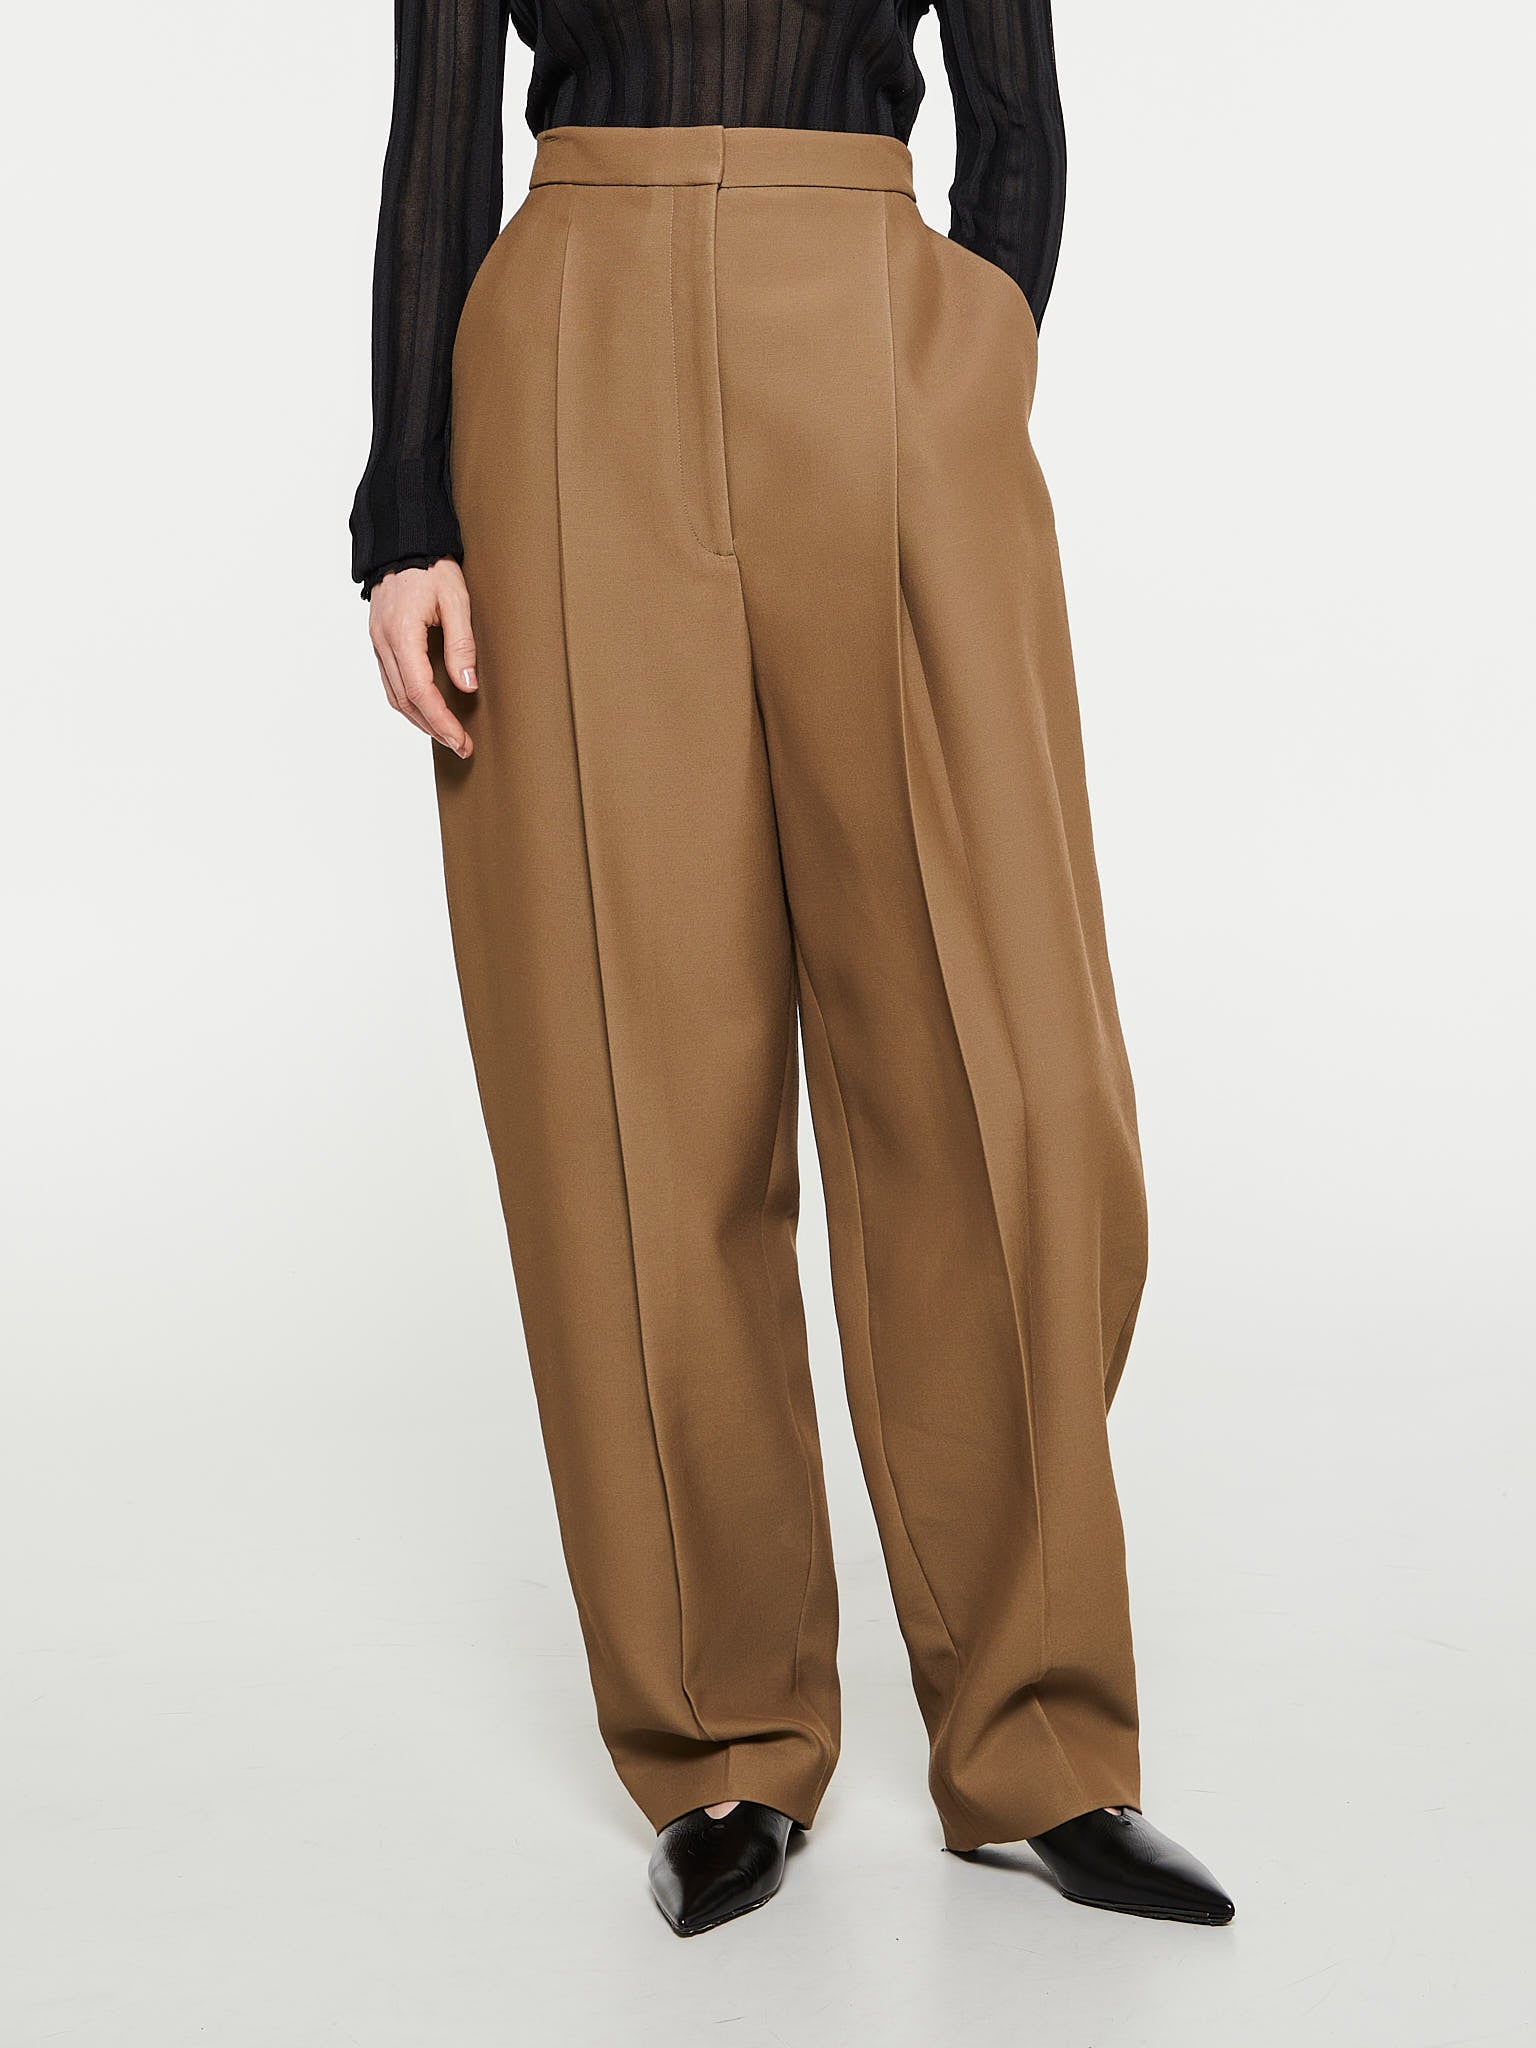 Khaite - Ashford Pants in Brown